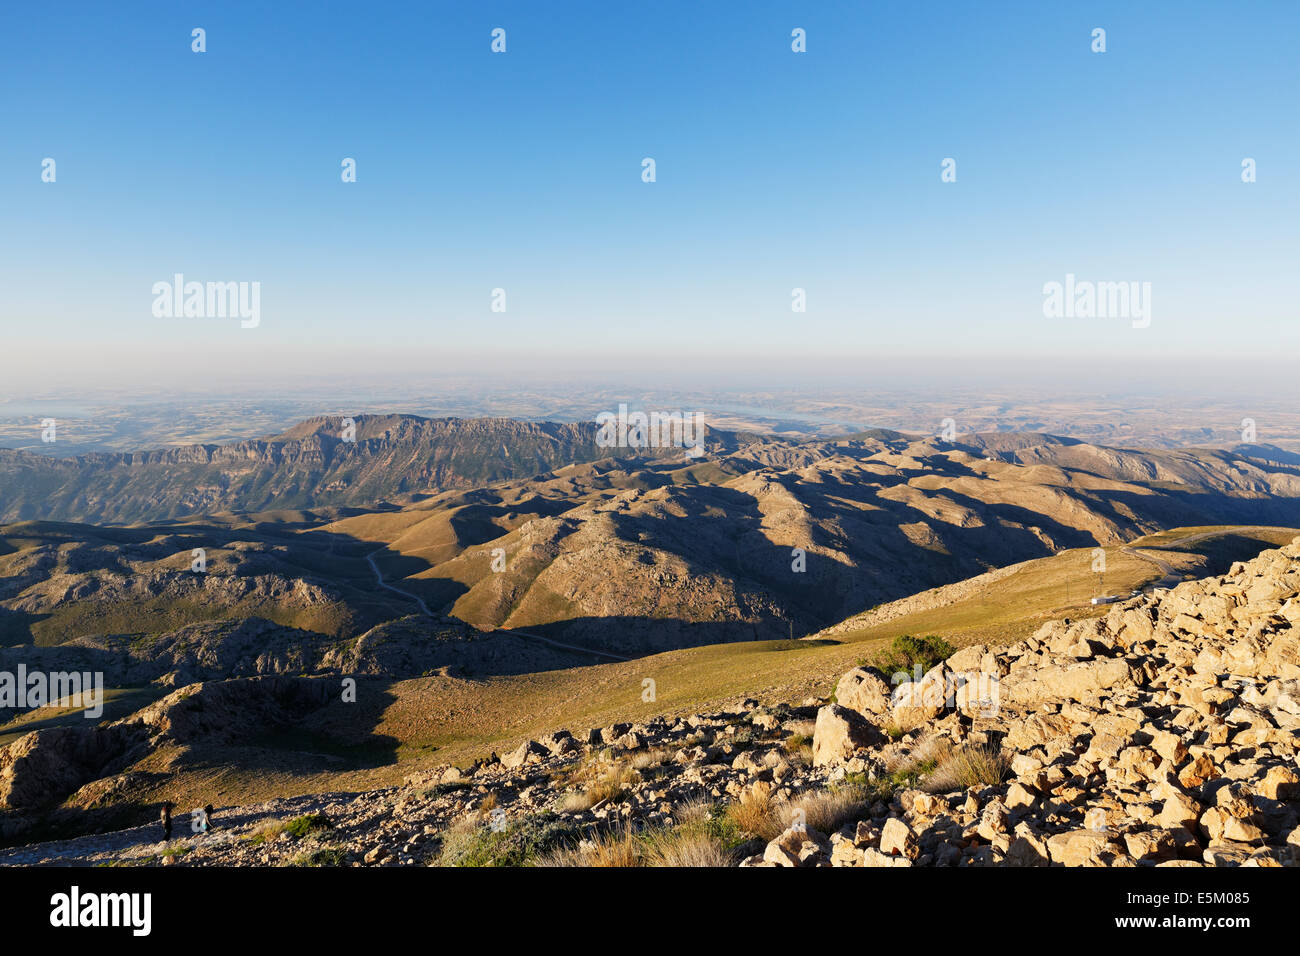 View from Mount Nemrut towards the south across the Atatürk Dam, Nemrut Dagi, Adiyaman province, Southeastern Anatolia Region Stock Photo